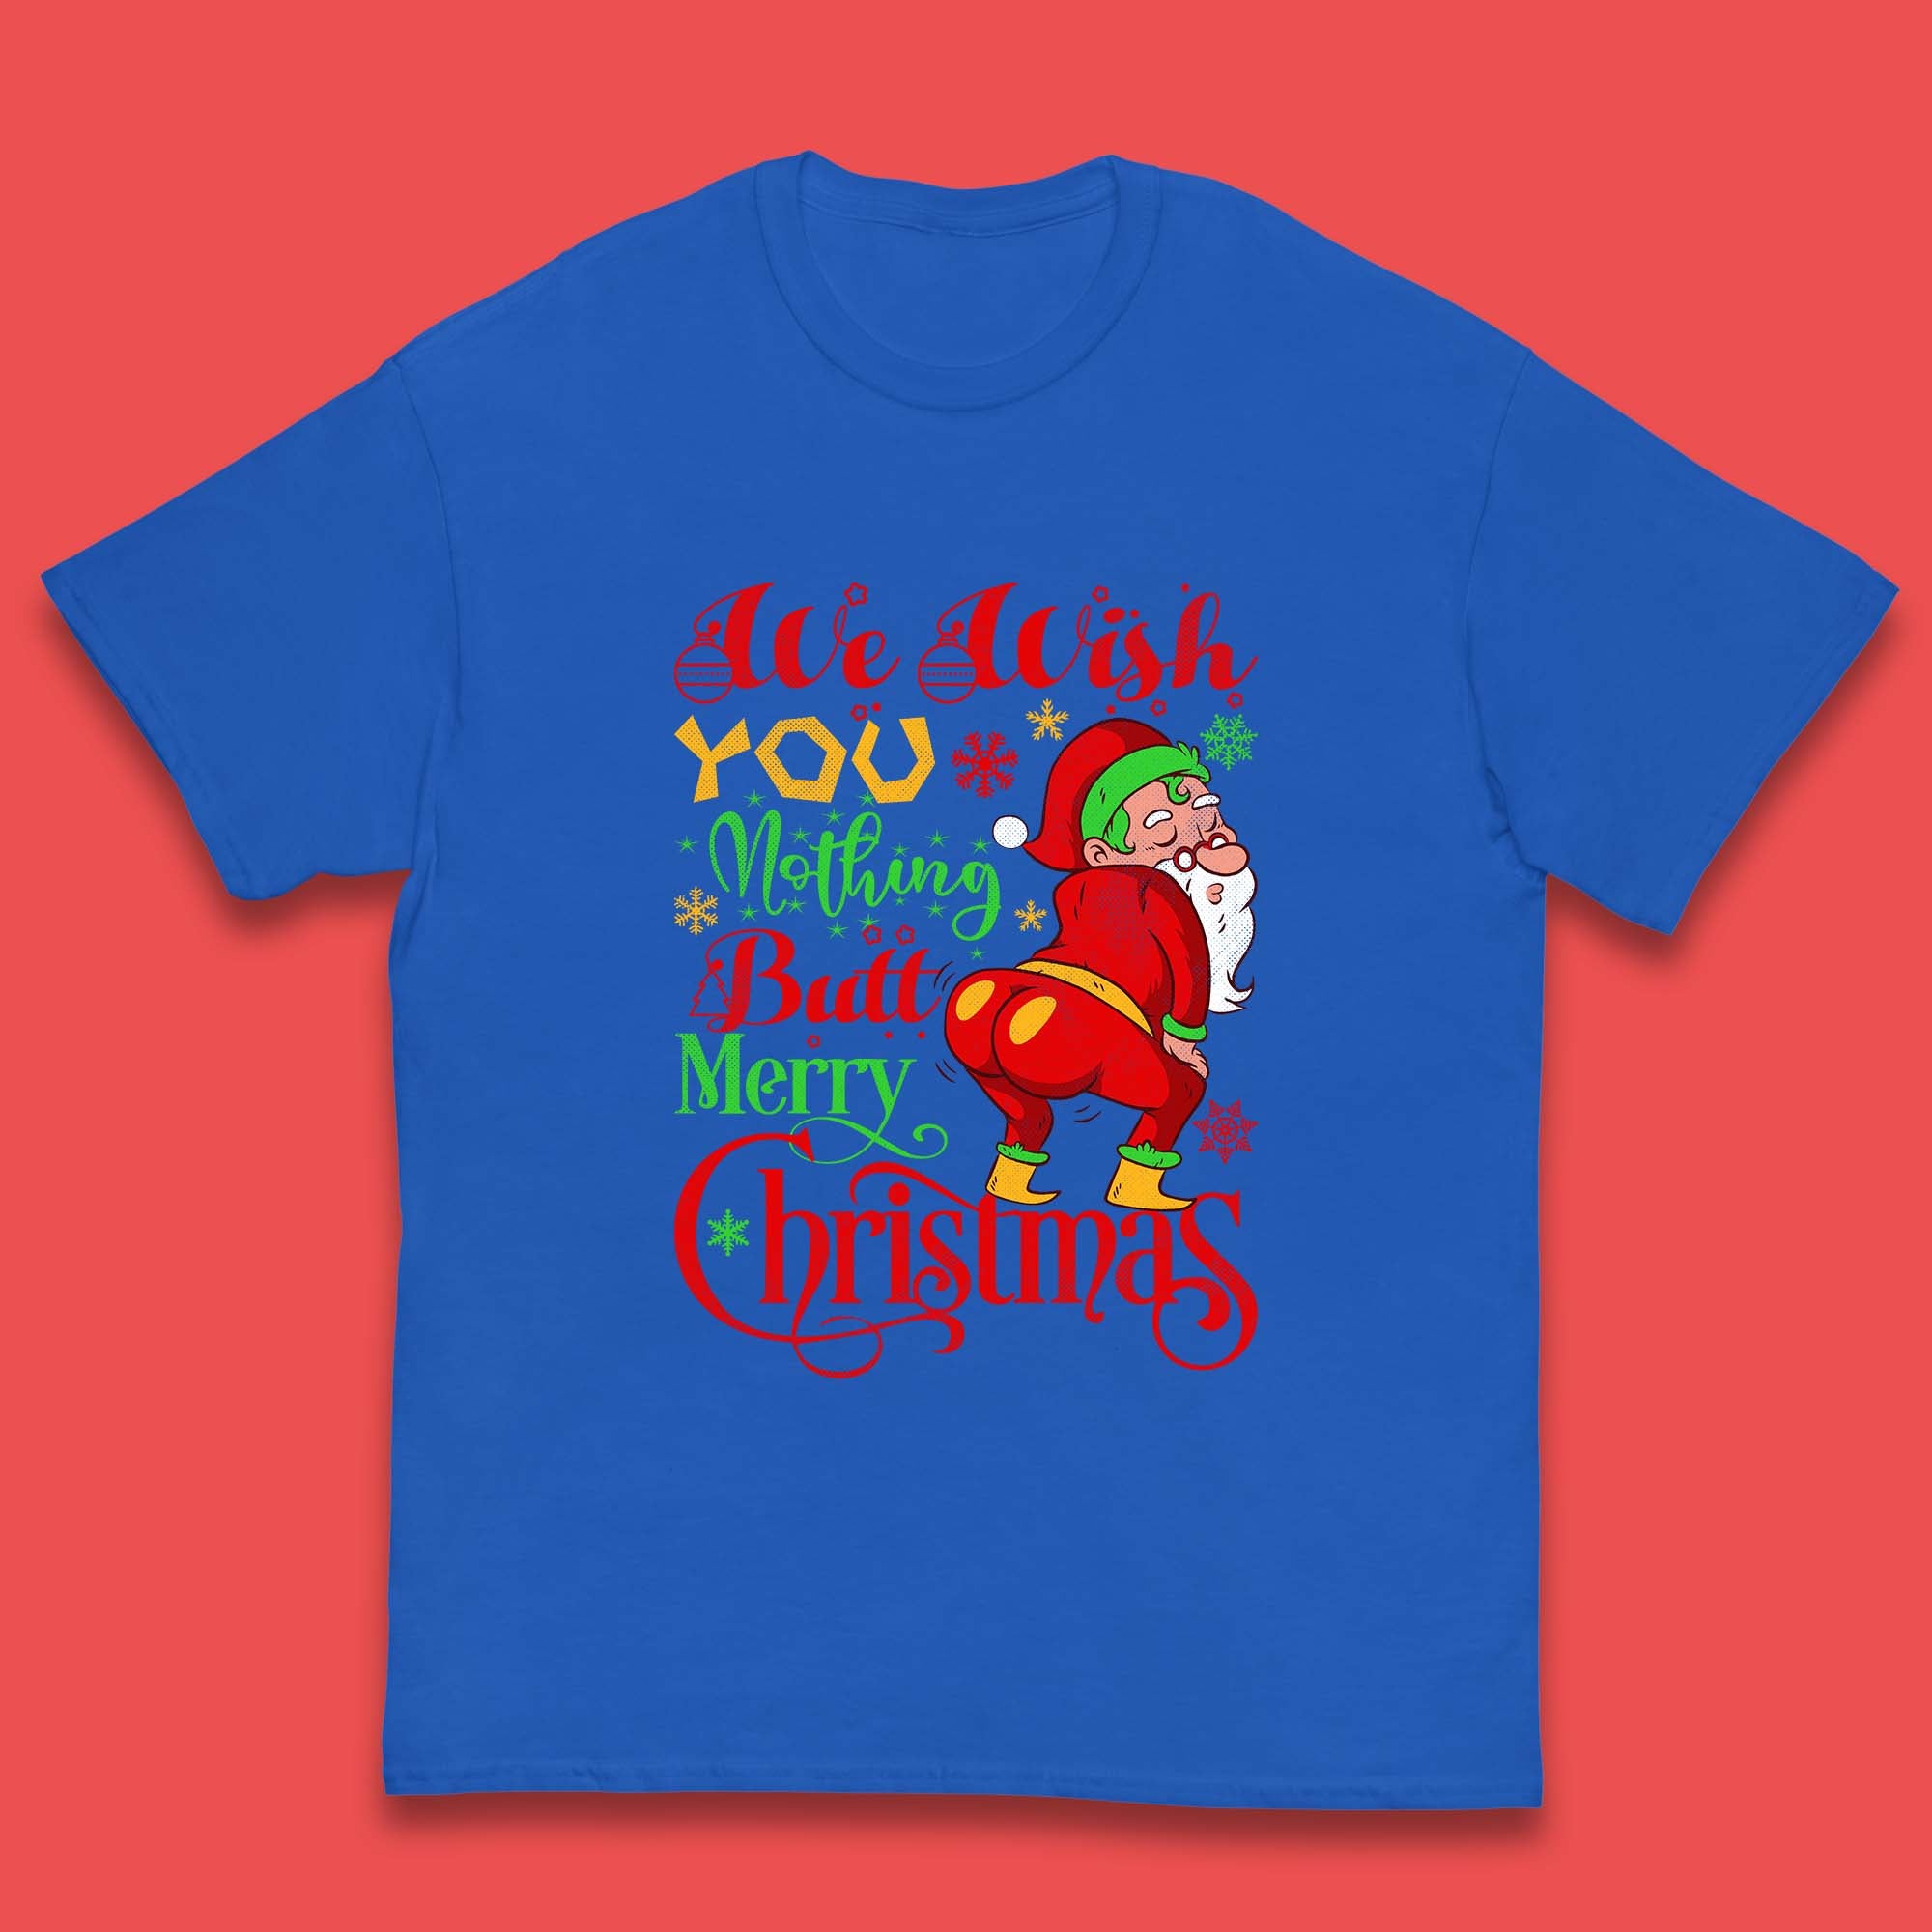 We Wish You Nothing Butt Merry Christmas Funny Naughty Santa Claus Xmas Kids T Shirt